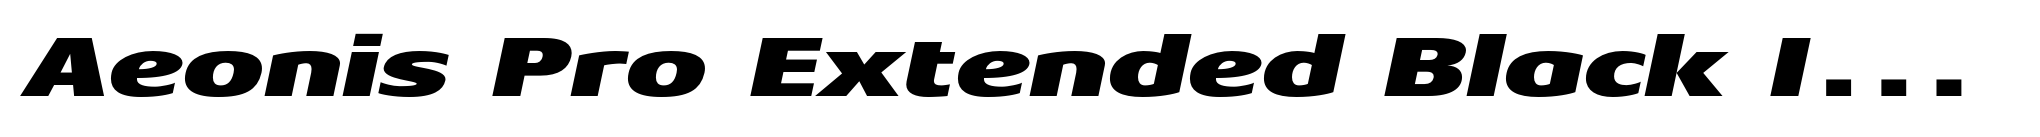 Aeonis Pro Extended Black Italic image